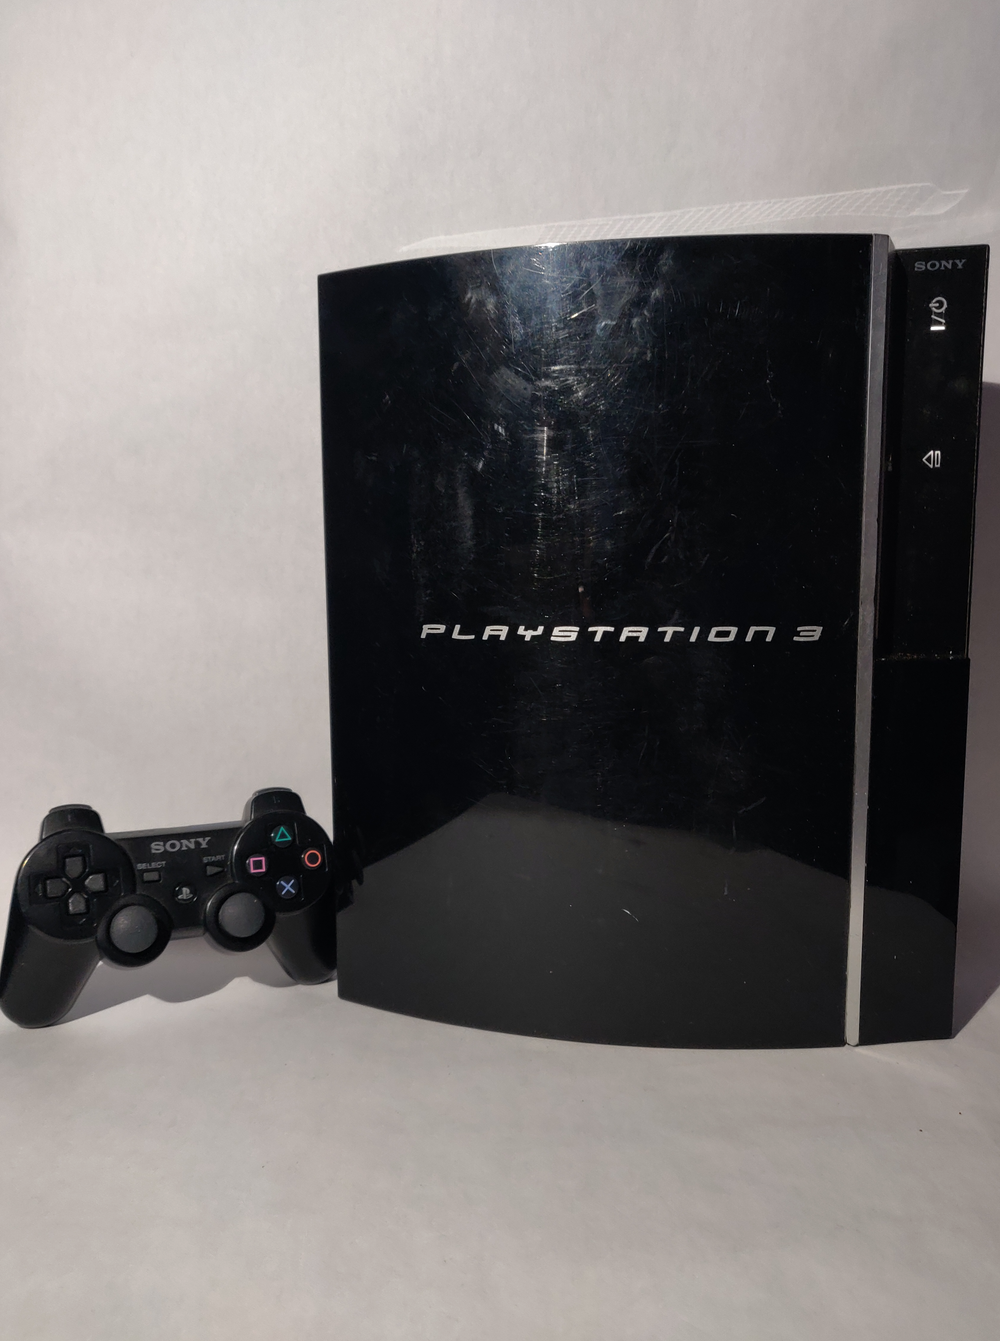 Playstation 3  Console W/ Remote (Original, fat model)